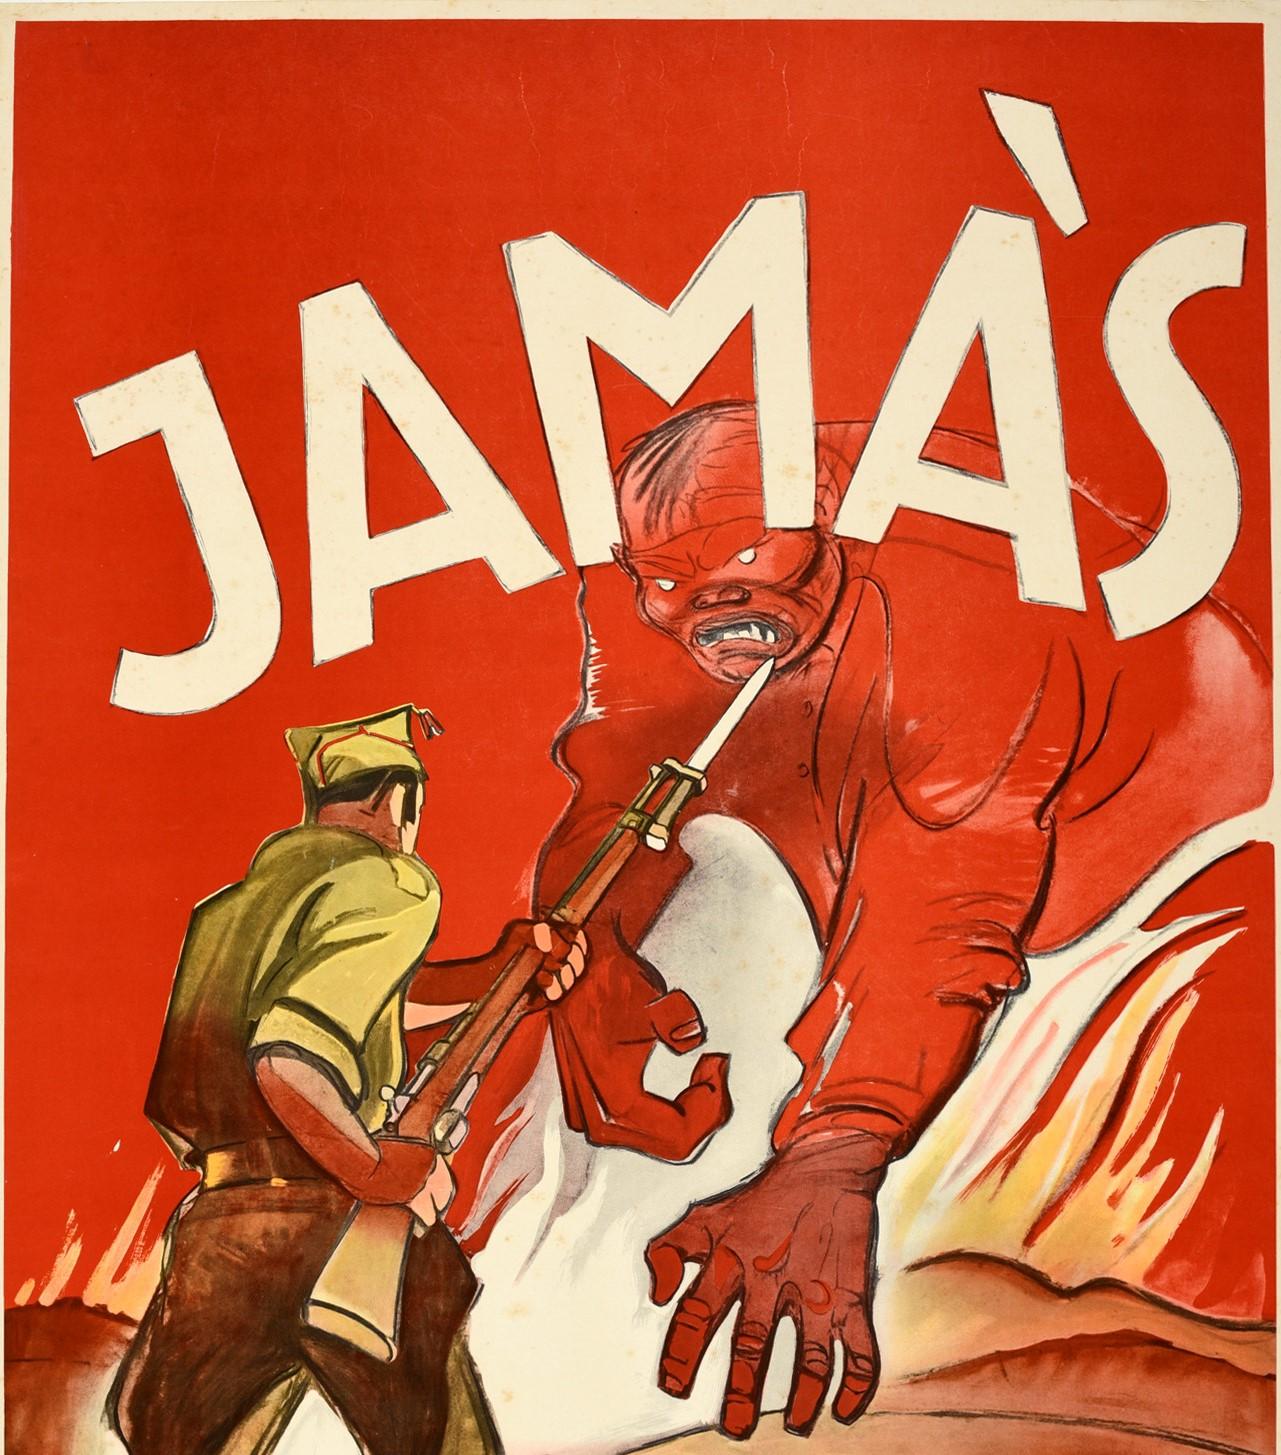 Original Vintage Anti Communist Spanish Civil War Propaganda Poster Jamas Never - Print by Unknown